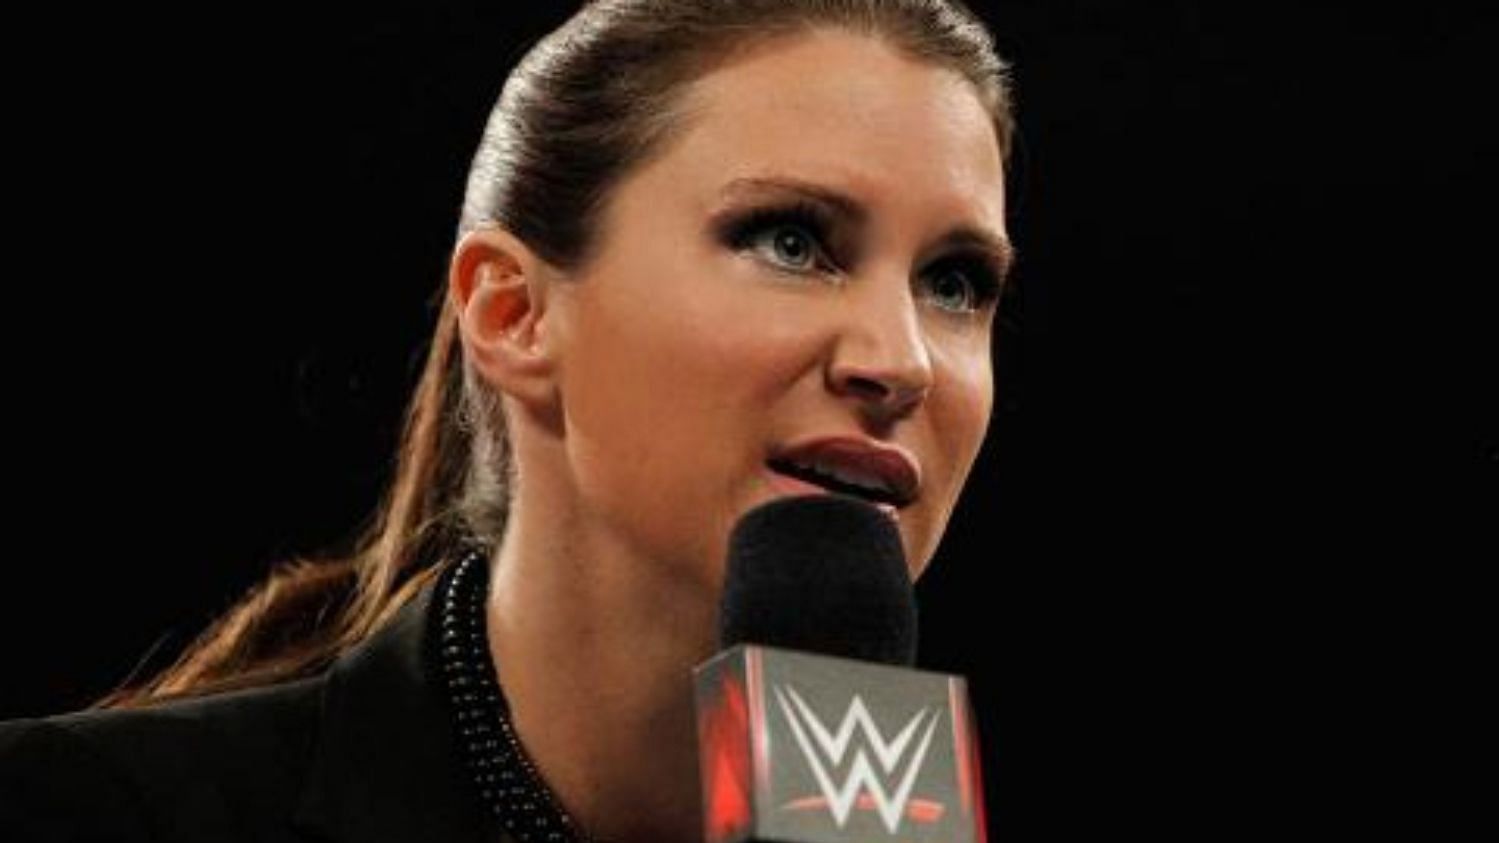 Stephanie McMahon has resigned as WWE